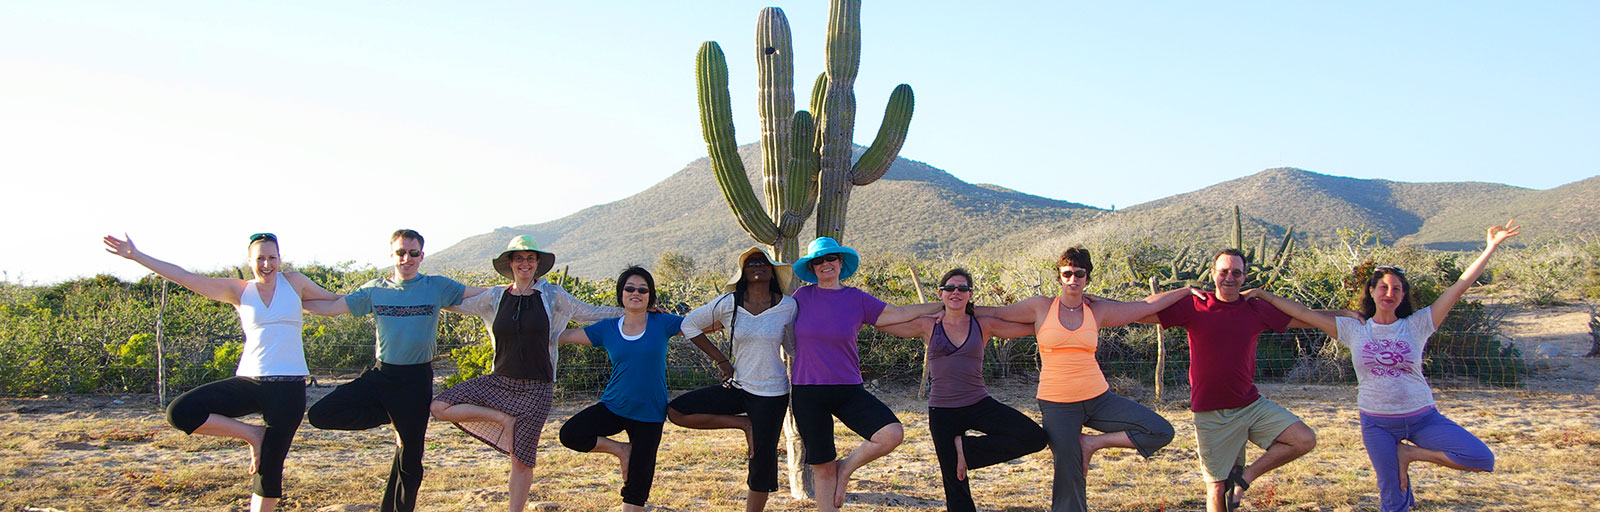 Yoga & Wellness Retreats in Mexico: Yoga Pose in the Desert